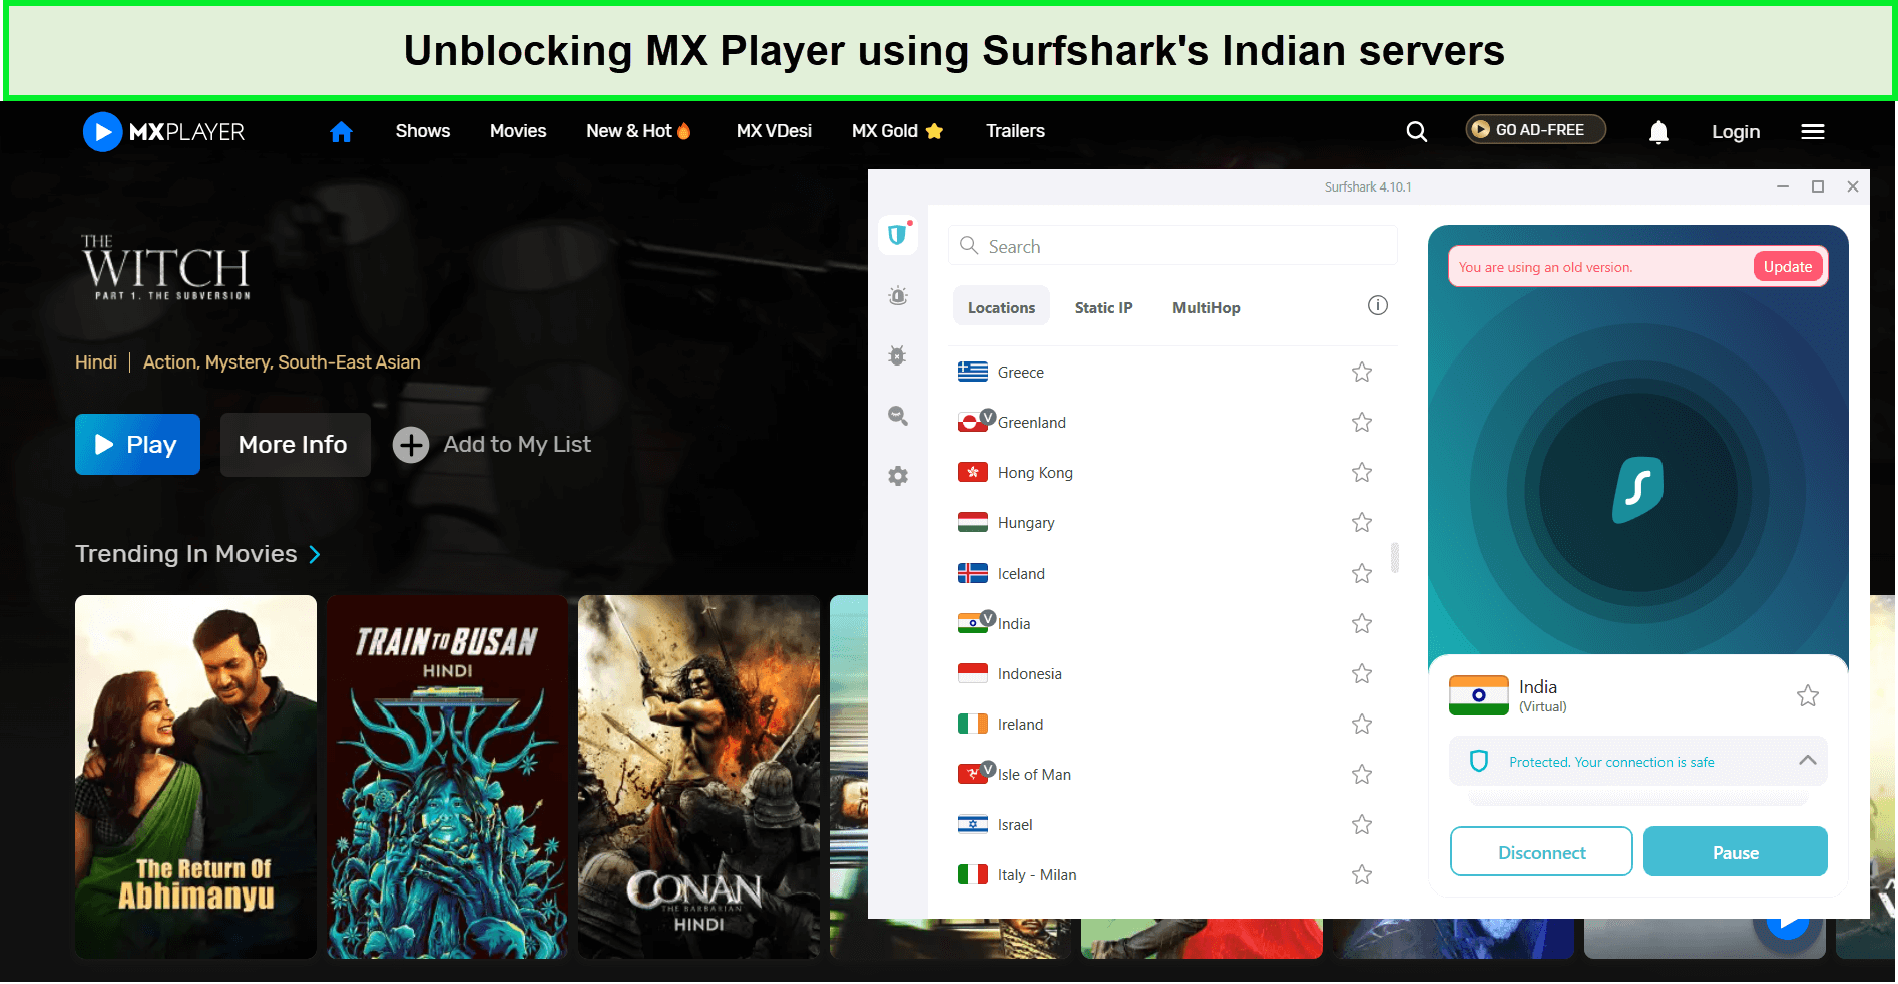 mx-player-in-Hong Kong-unblocked-surfshark